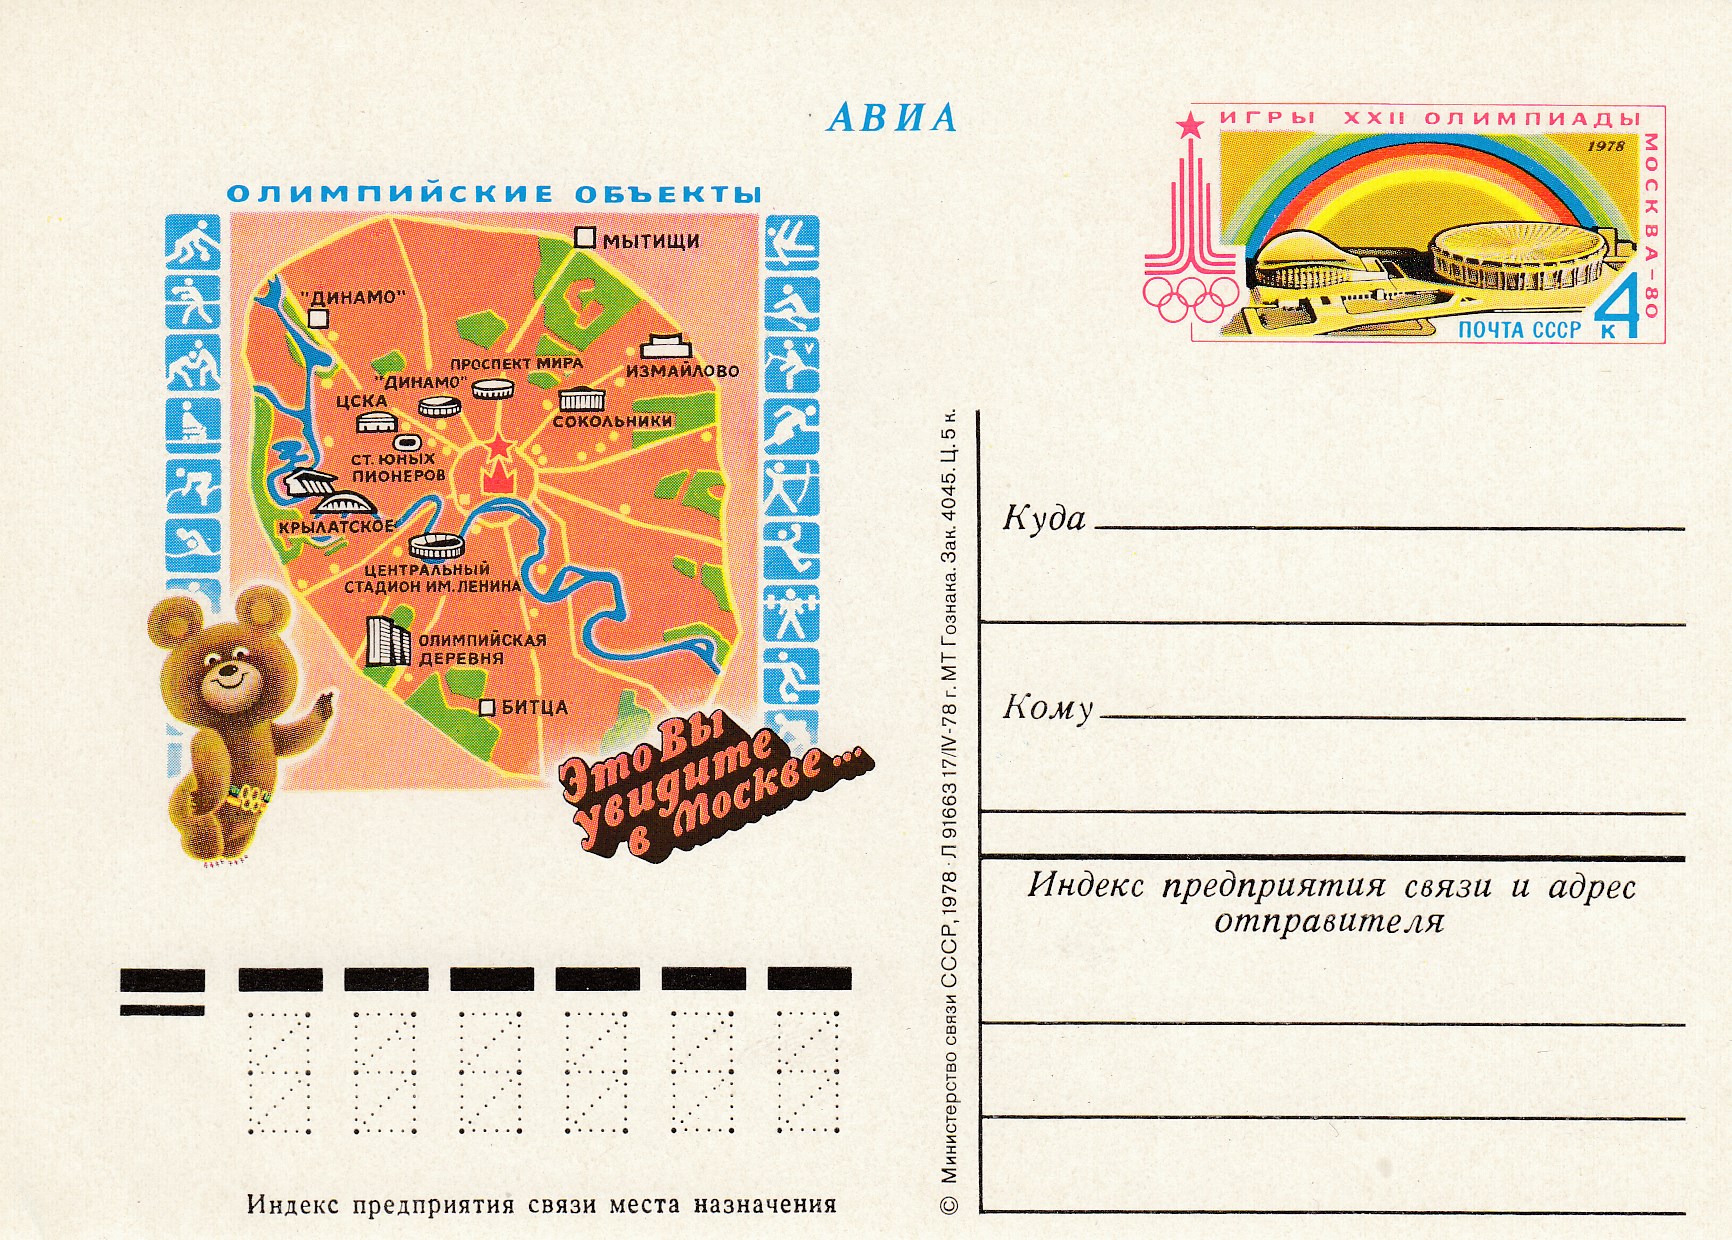 60. Почтовая карточка ОМ СССР 1978 год.Олимпийские объекты. XXII  Олимпиада-80. 